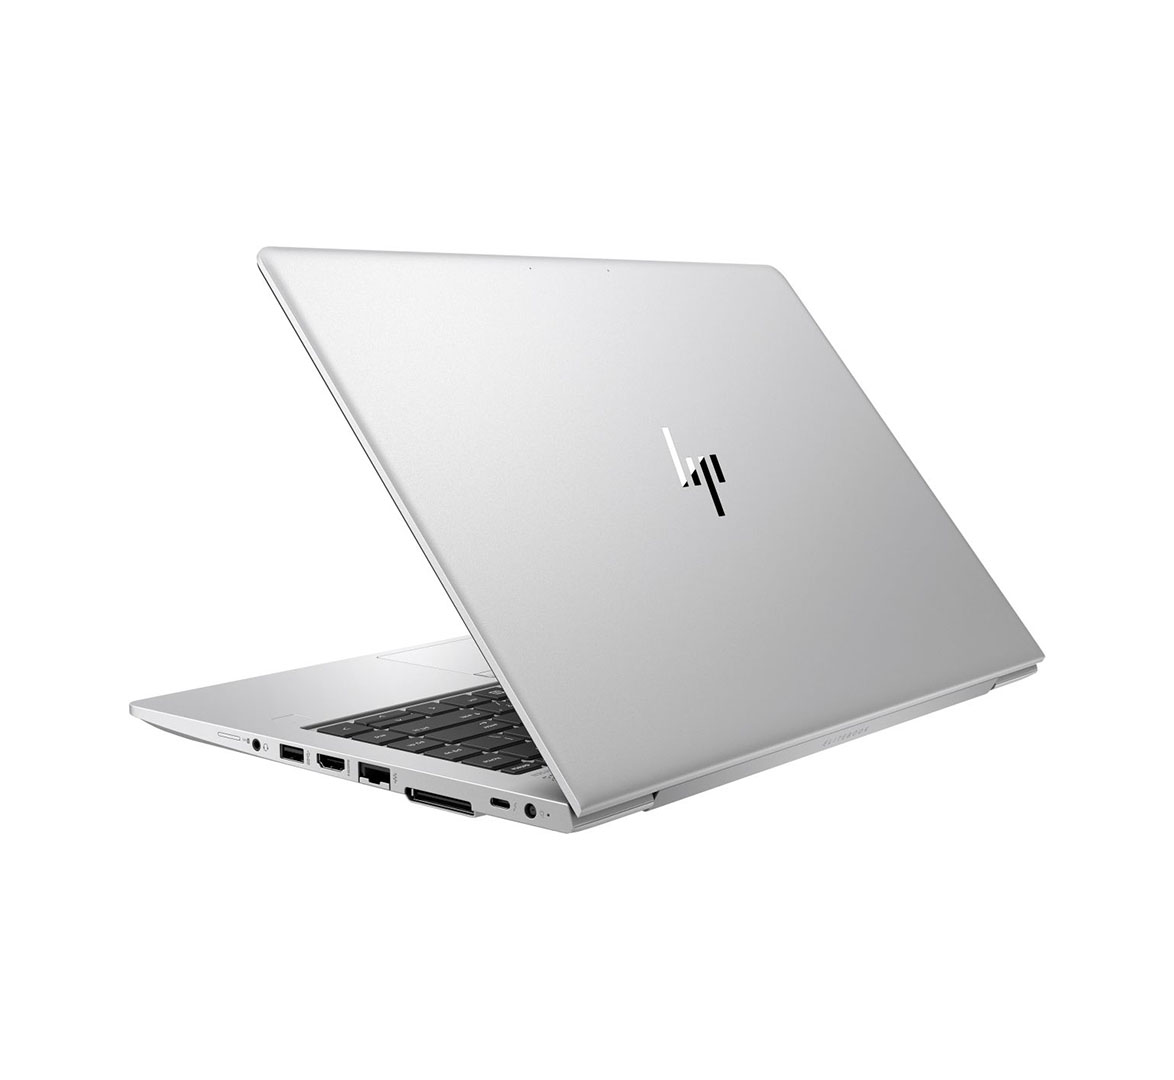 HP EliteBook 840 G6 Business Laptop, Intel Core i5-8th Generation CPU, 16GB RAM, 256GB SSD, 14 inch Display, Windows 10 Pro